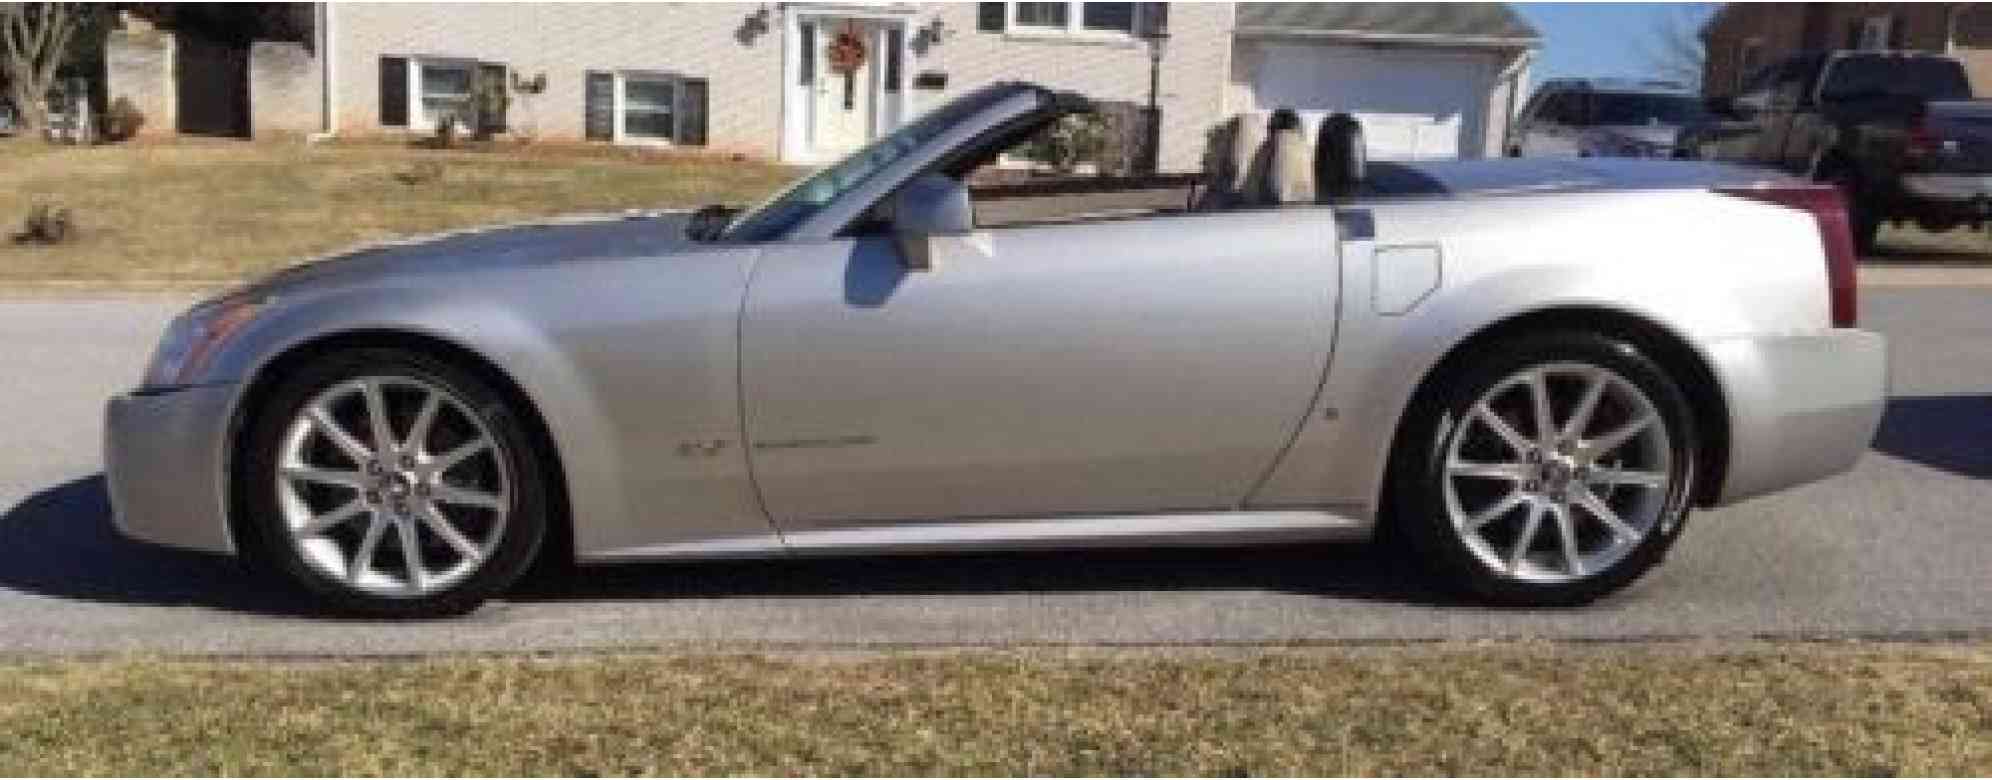 2006 Cadillac XLR Hardtop convertible